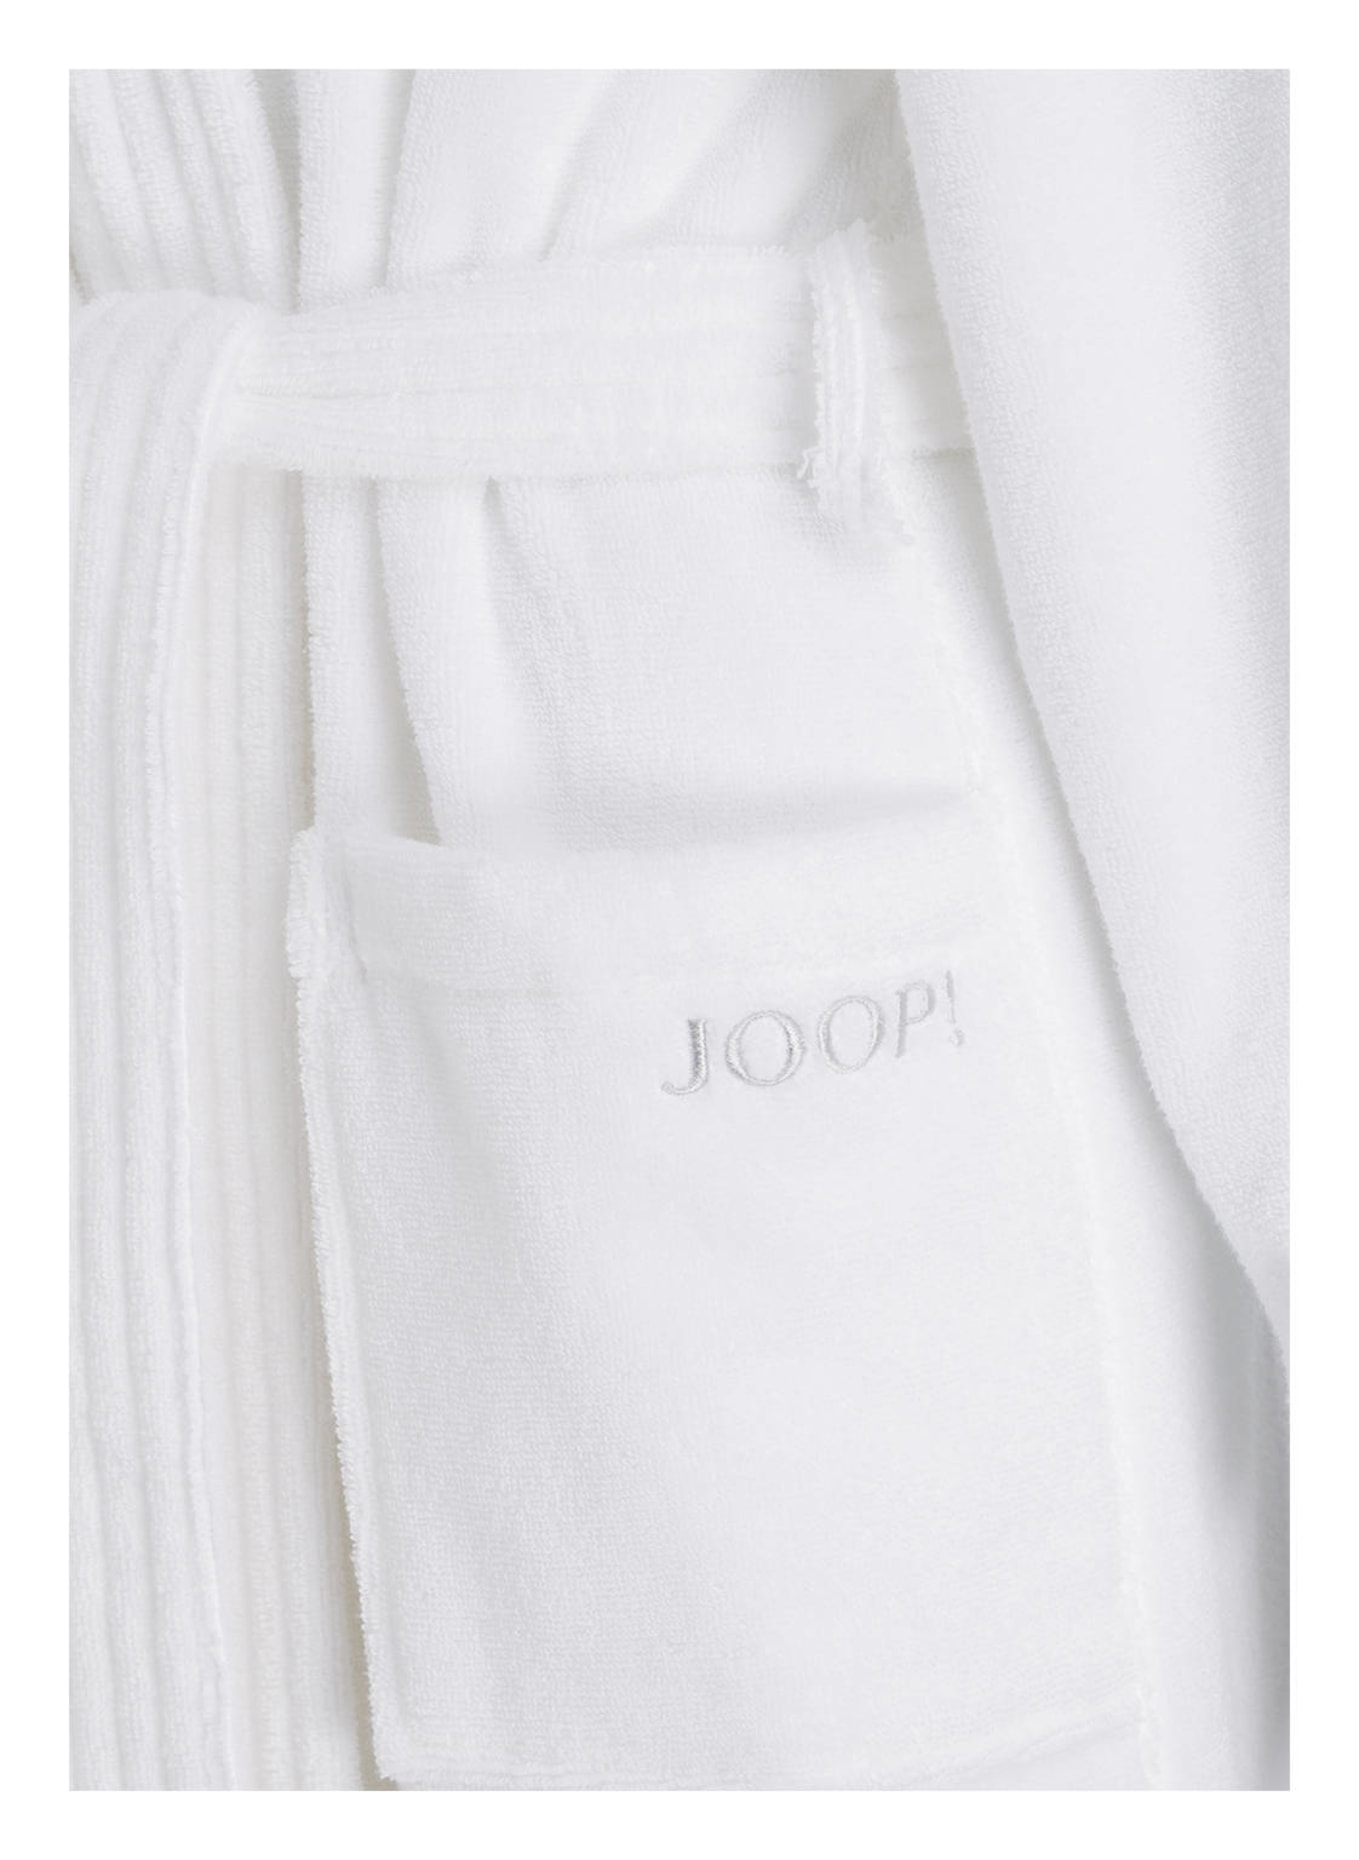 JOOP! Damen-Bademantel mit Kapuze, Farbe: WEISS (Bild 3)